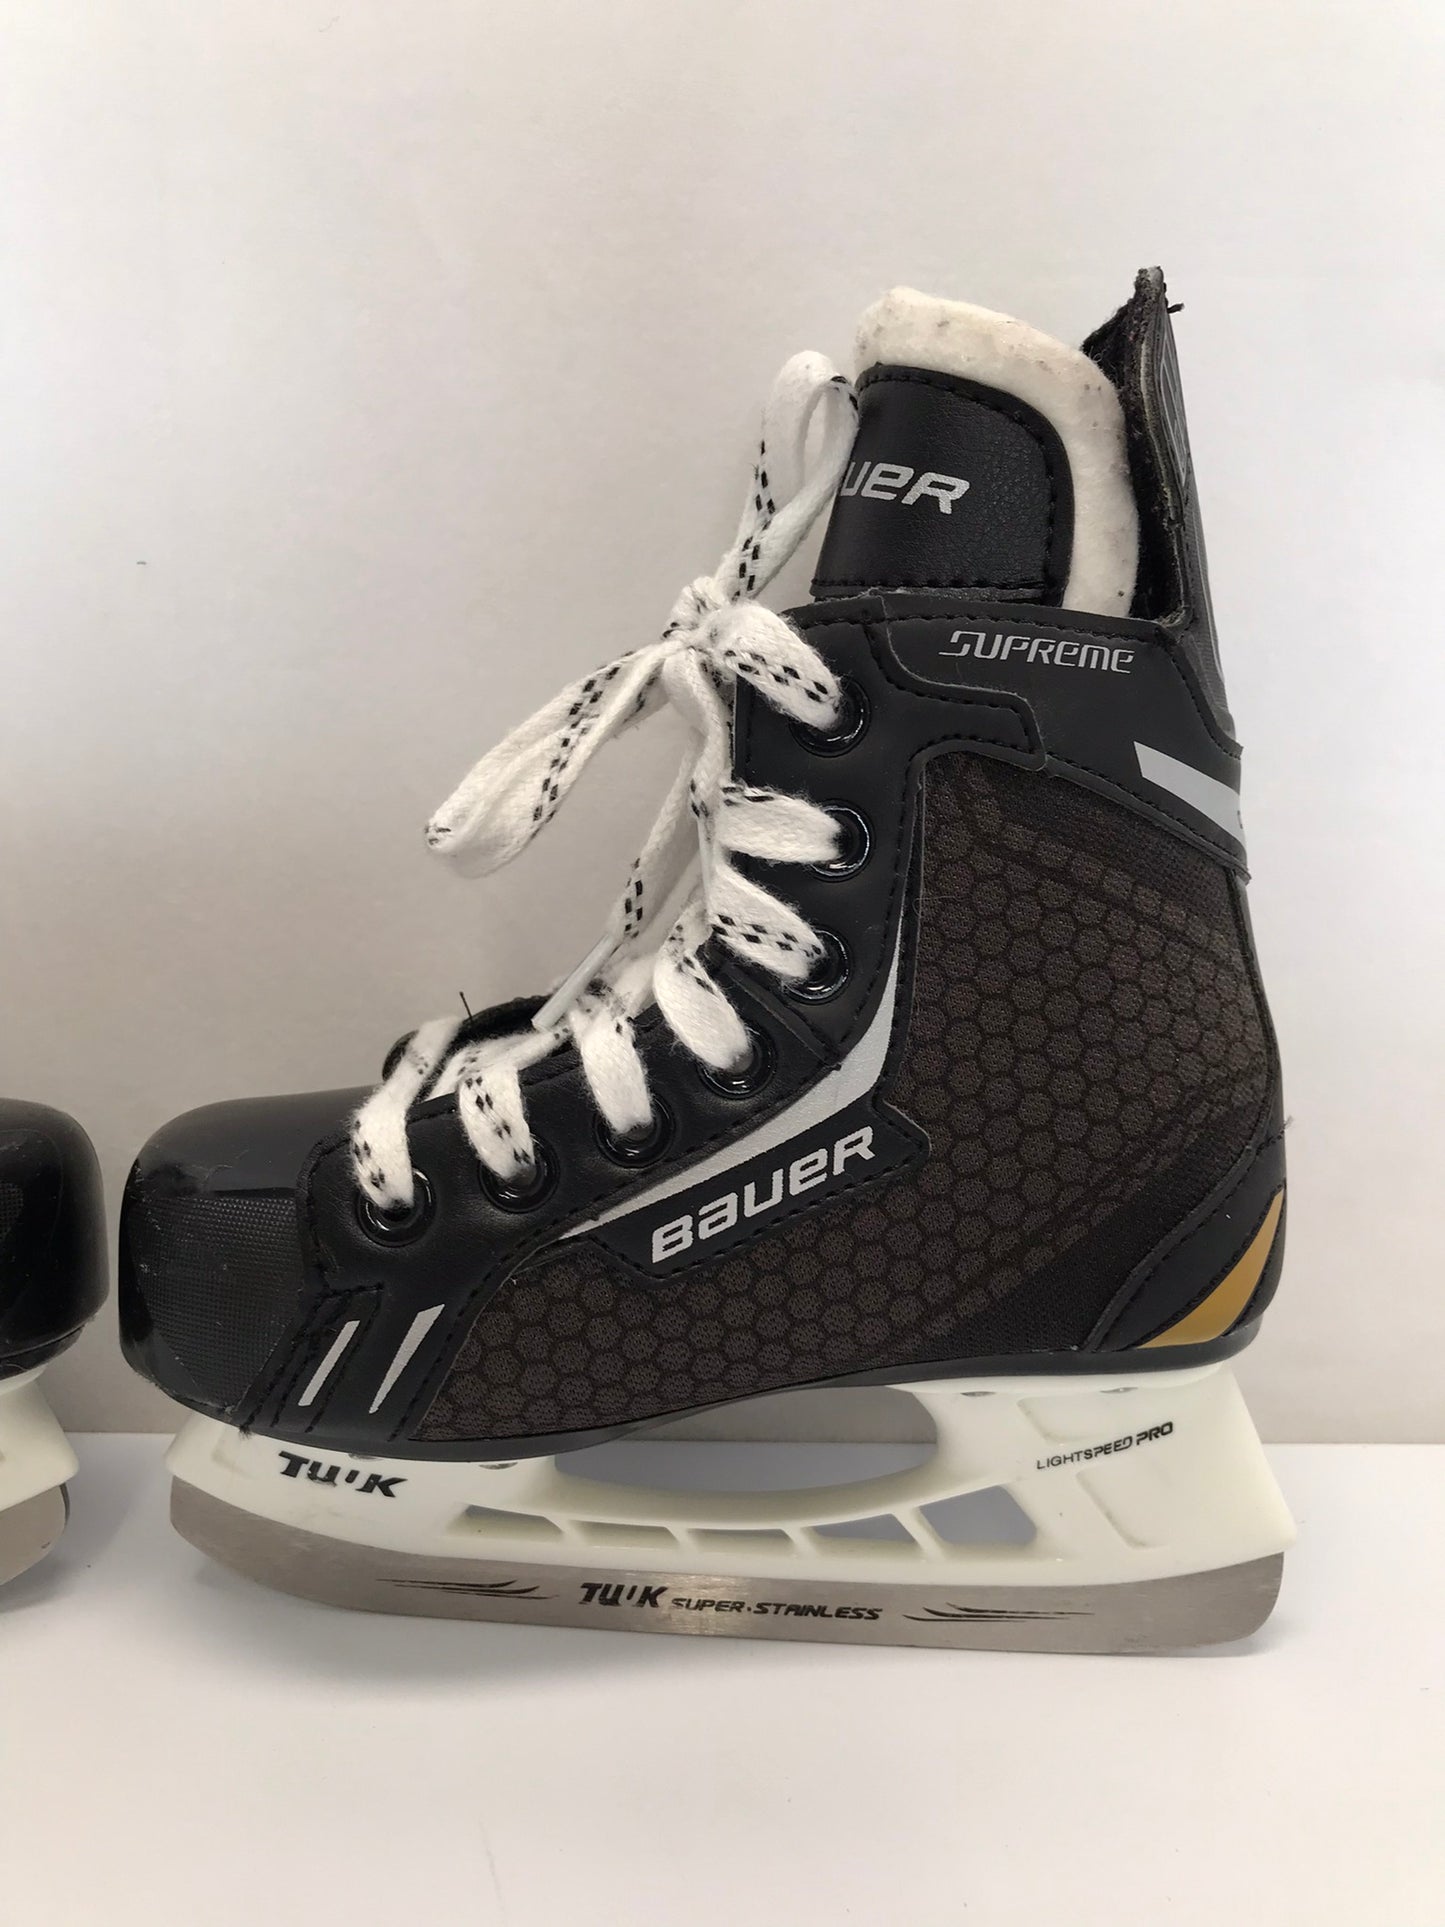 Hockey Skates Child Size 11 Shoe Size Bauer Supreme New Demo Model